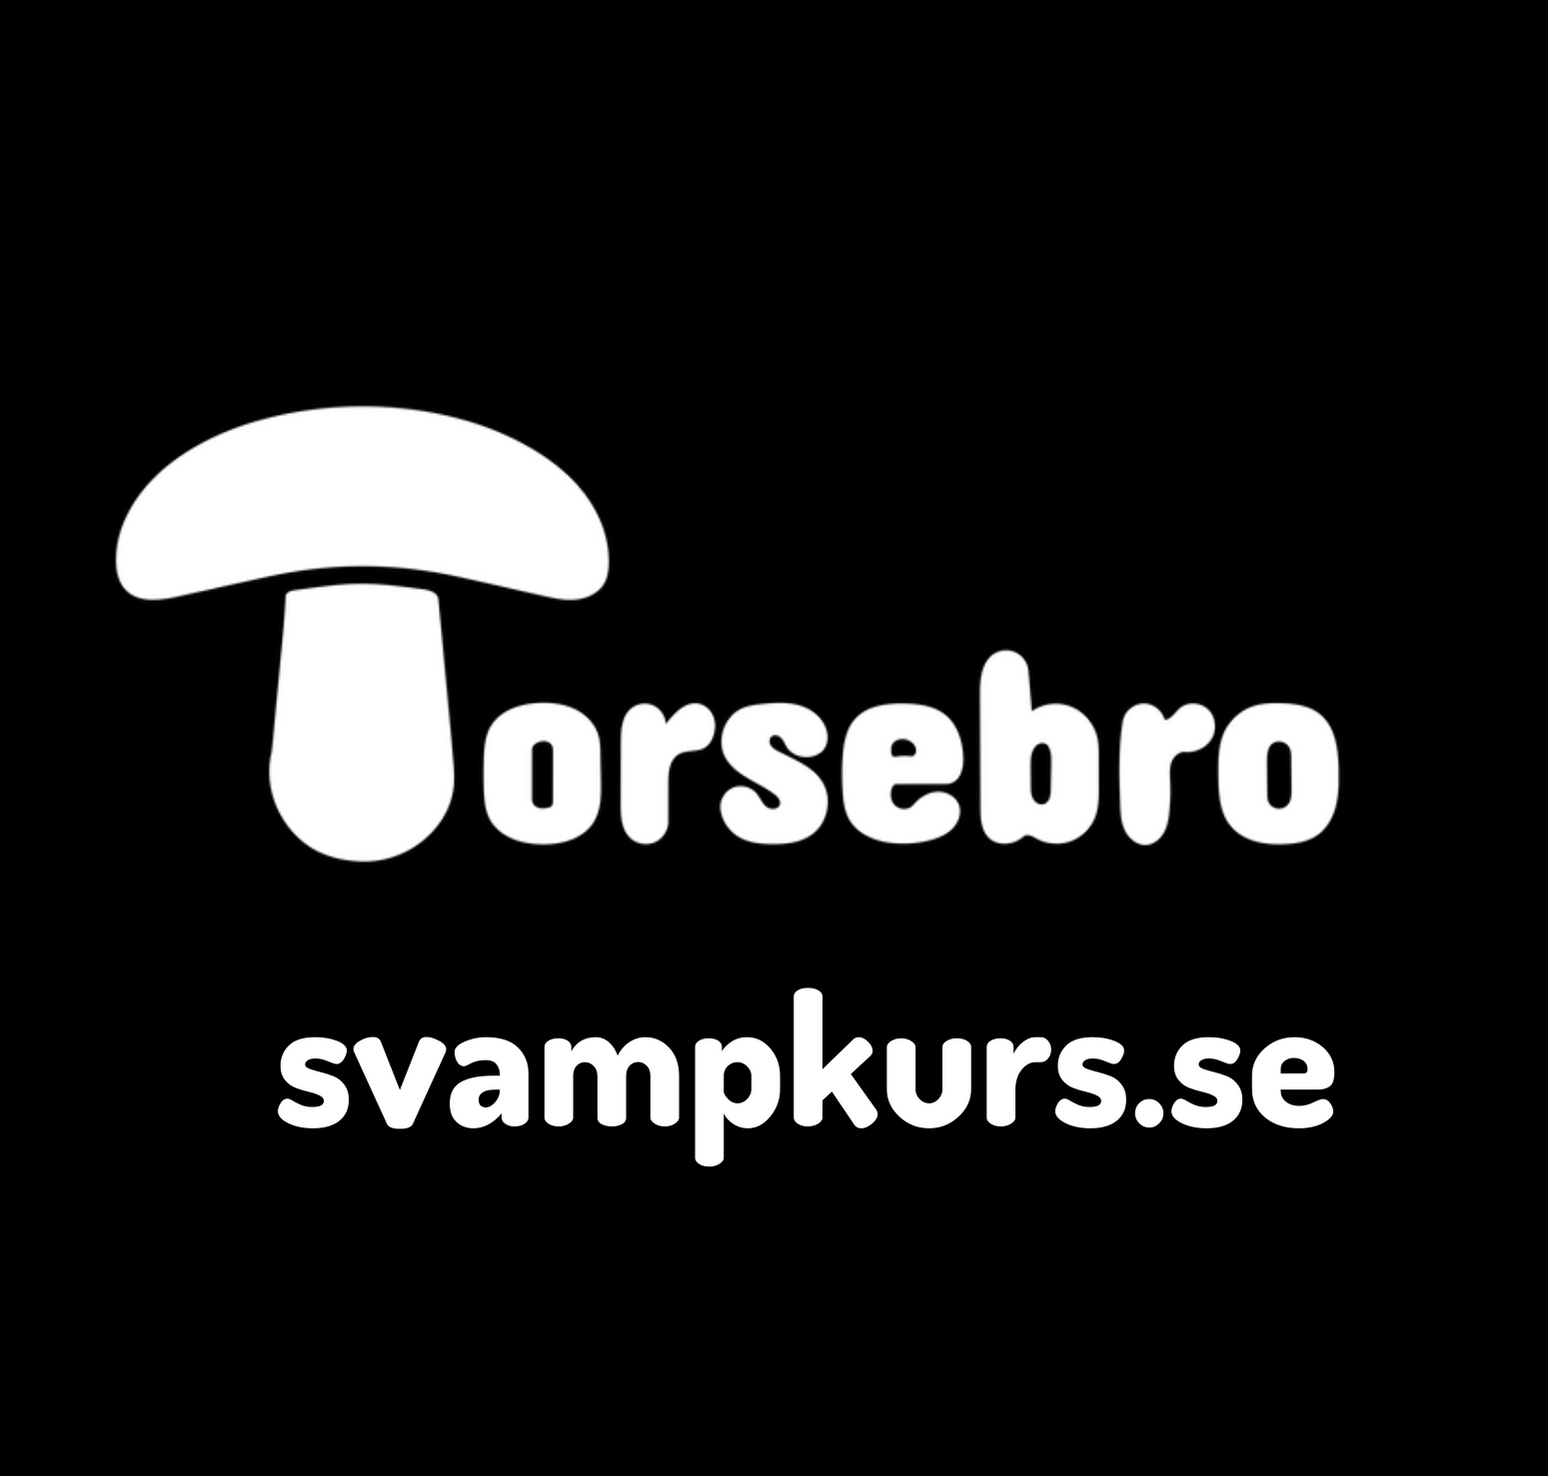 Torsebro Svamp